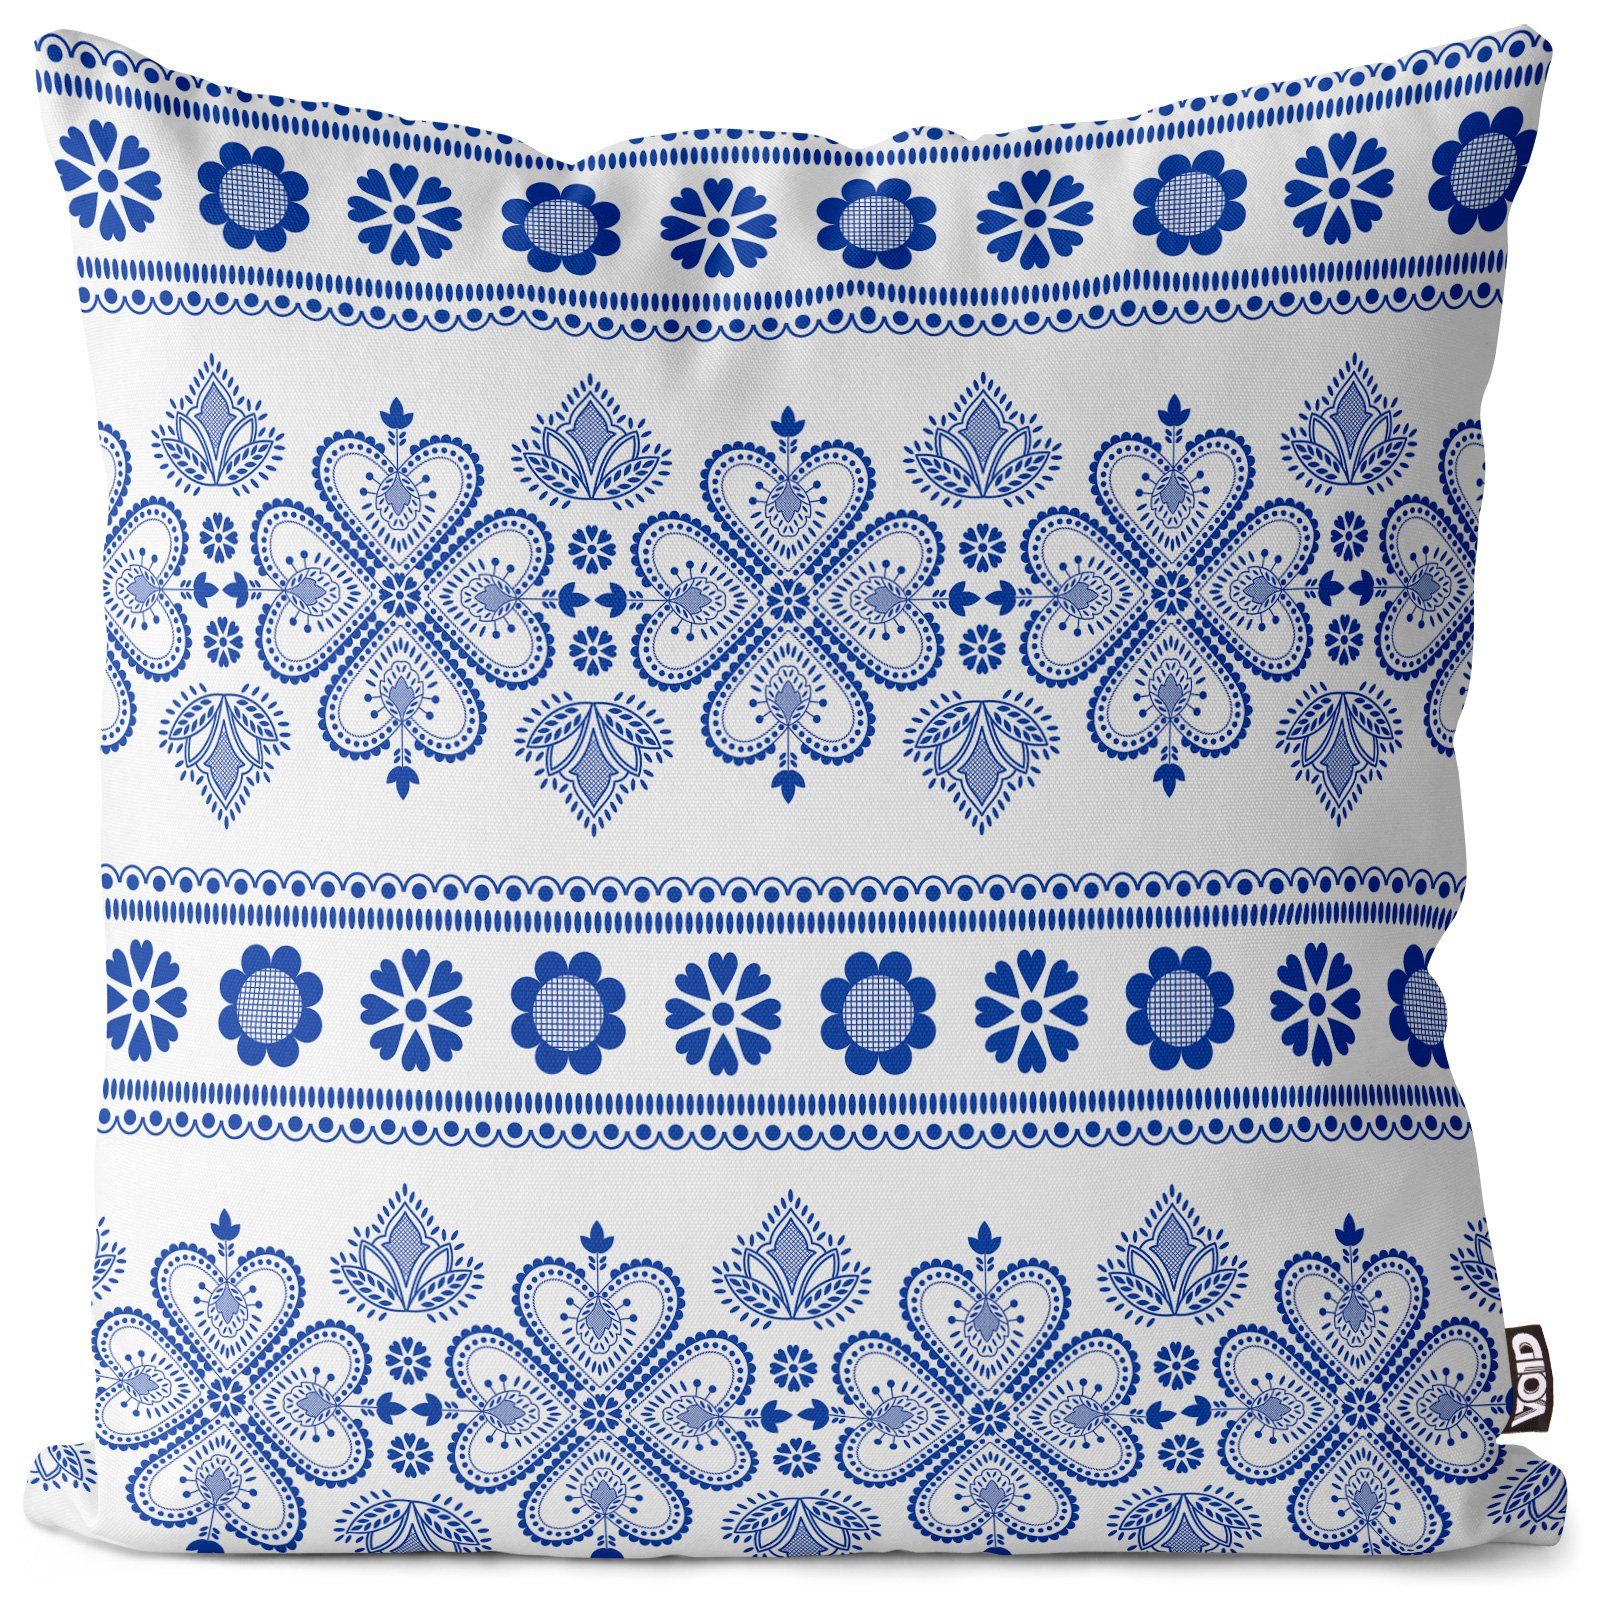 Kissenbezug, VOID (1 Stück), Sofa-Kissen Bad Muster Kachel gemustert skandinavien Blumen Blüten Blätter Küche Schweden blau weiss floral